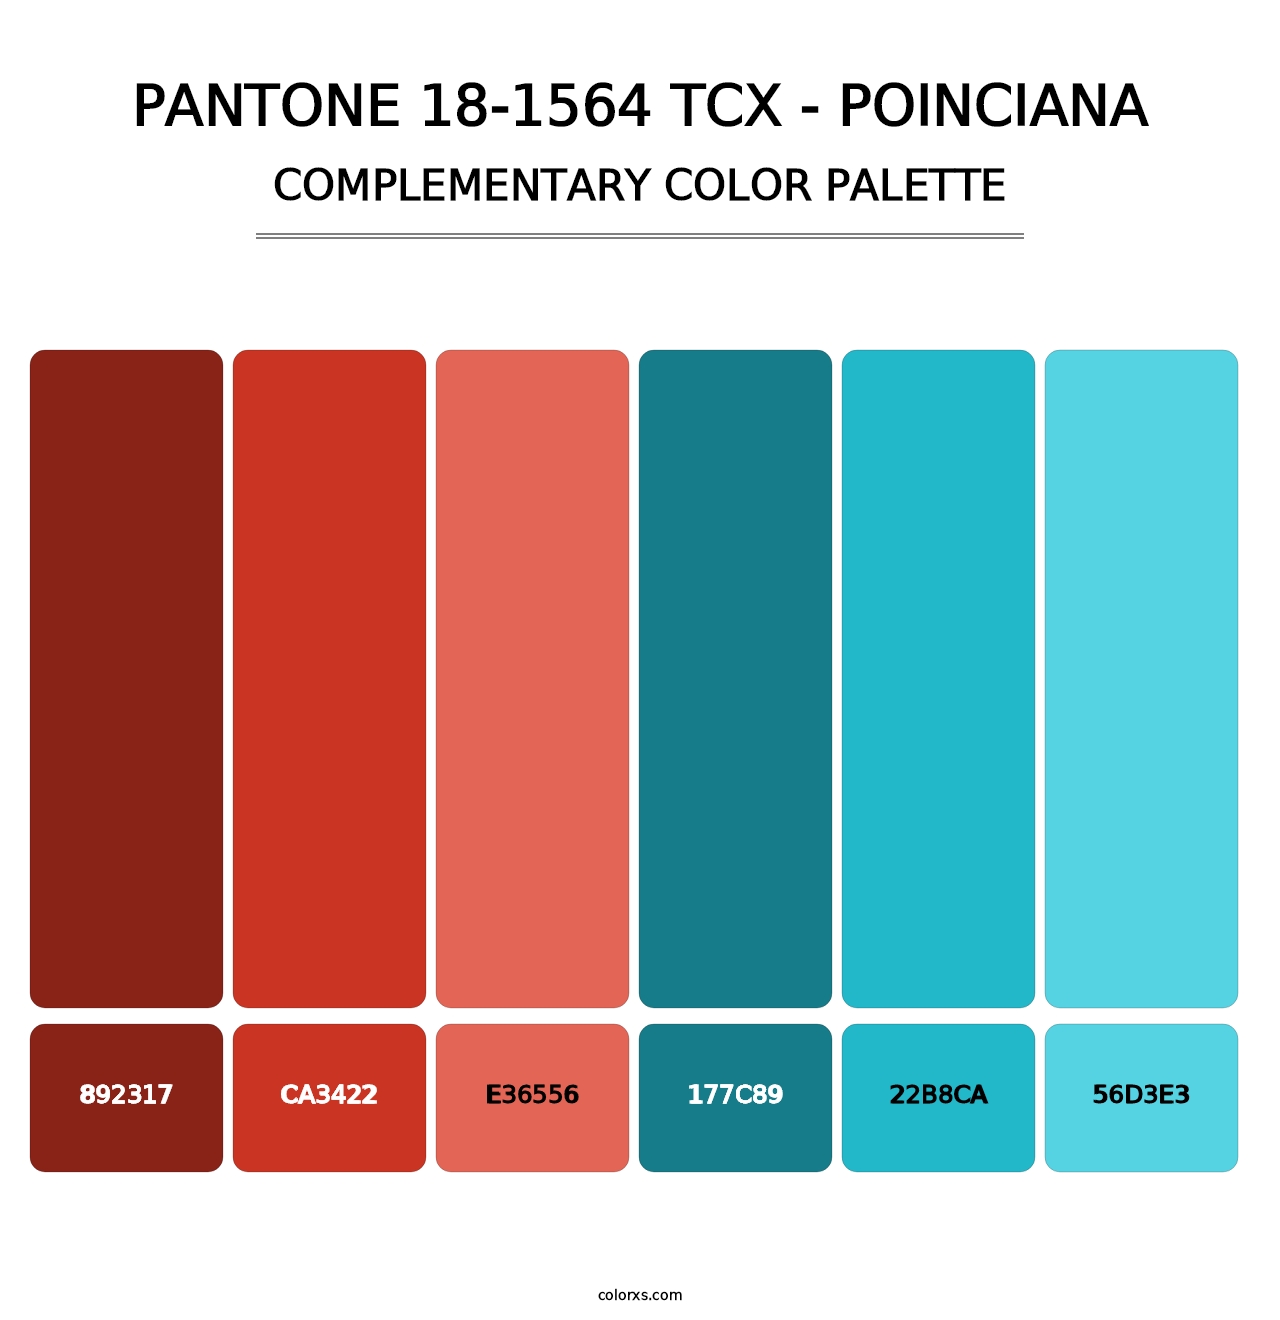 PANTONE 18-1564 TCX - Poinciana - Complementary Color Palette